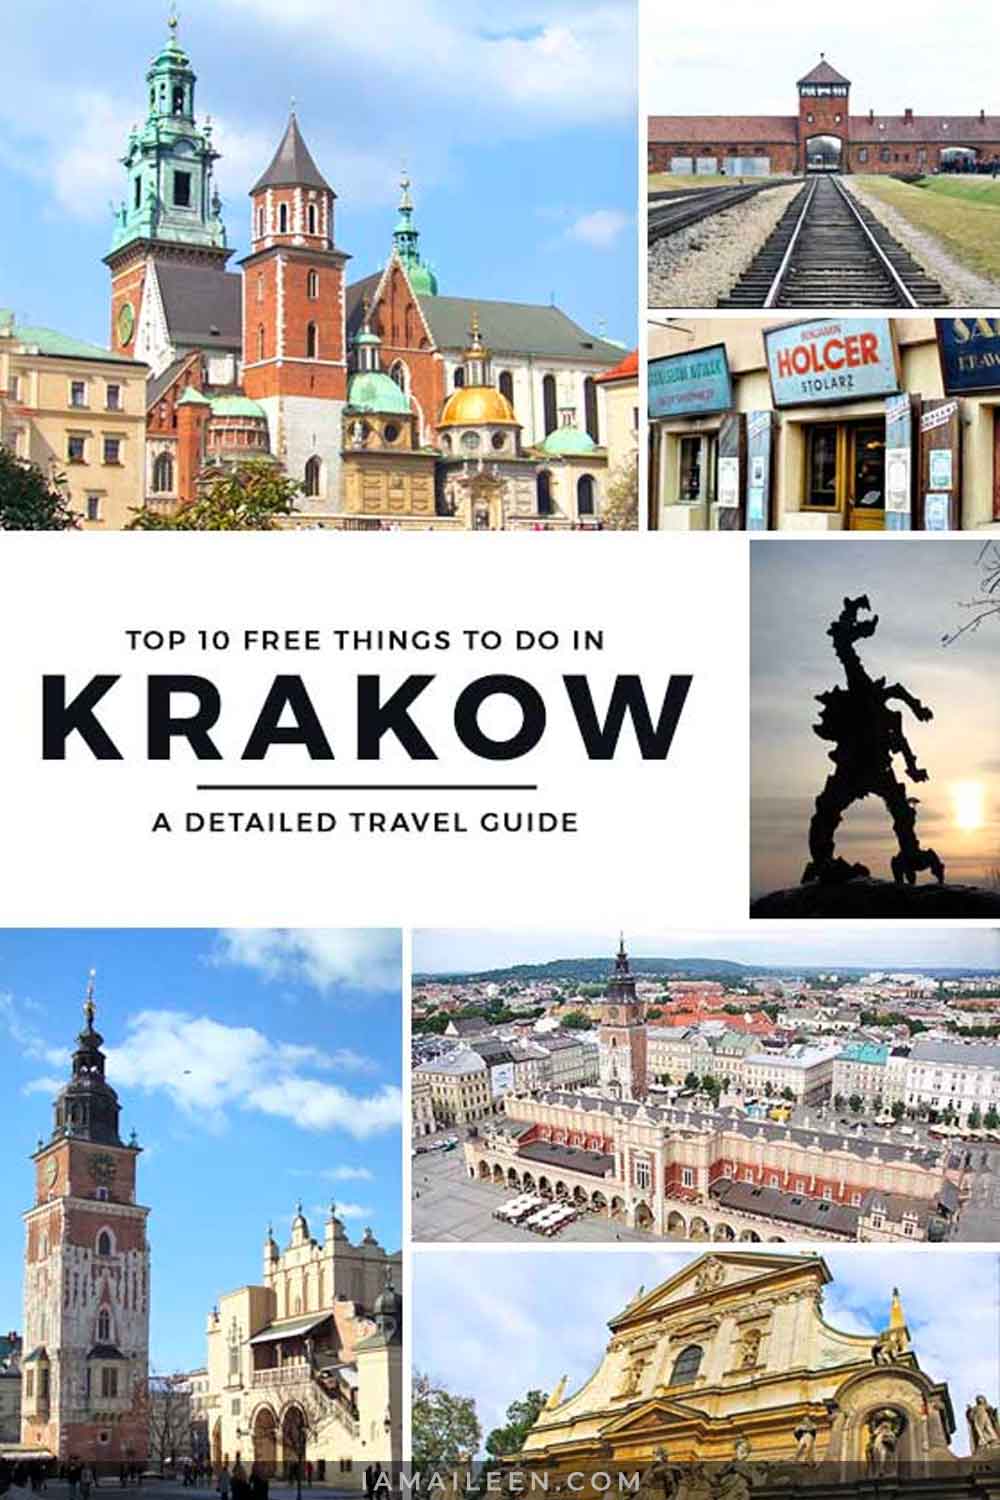 FREE Things to Do in Krakow, Poland